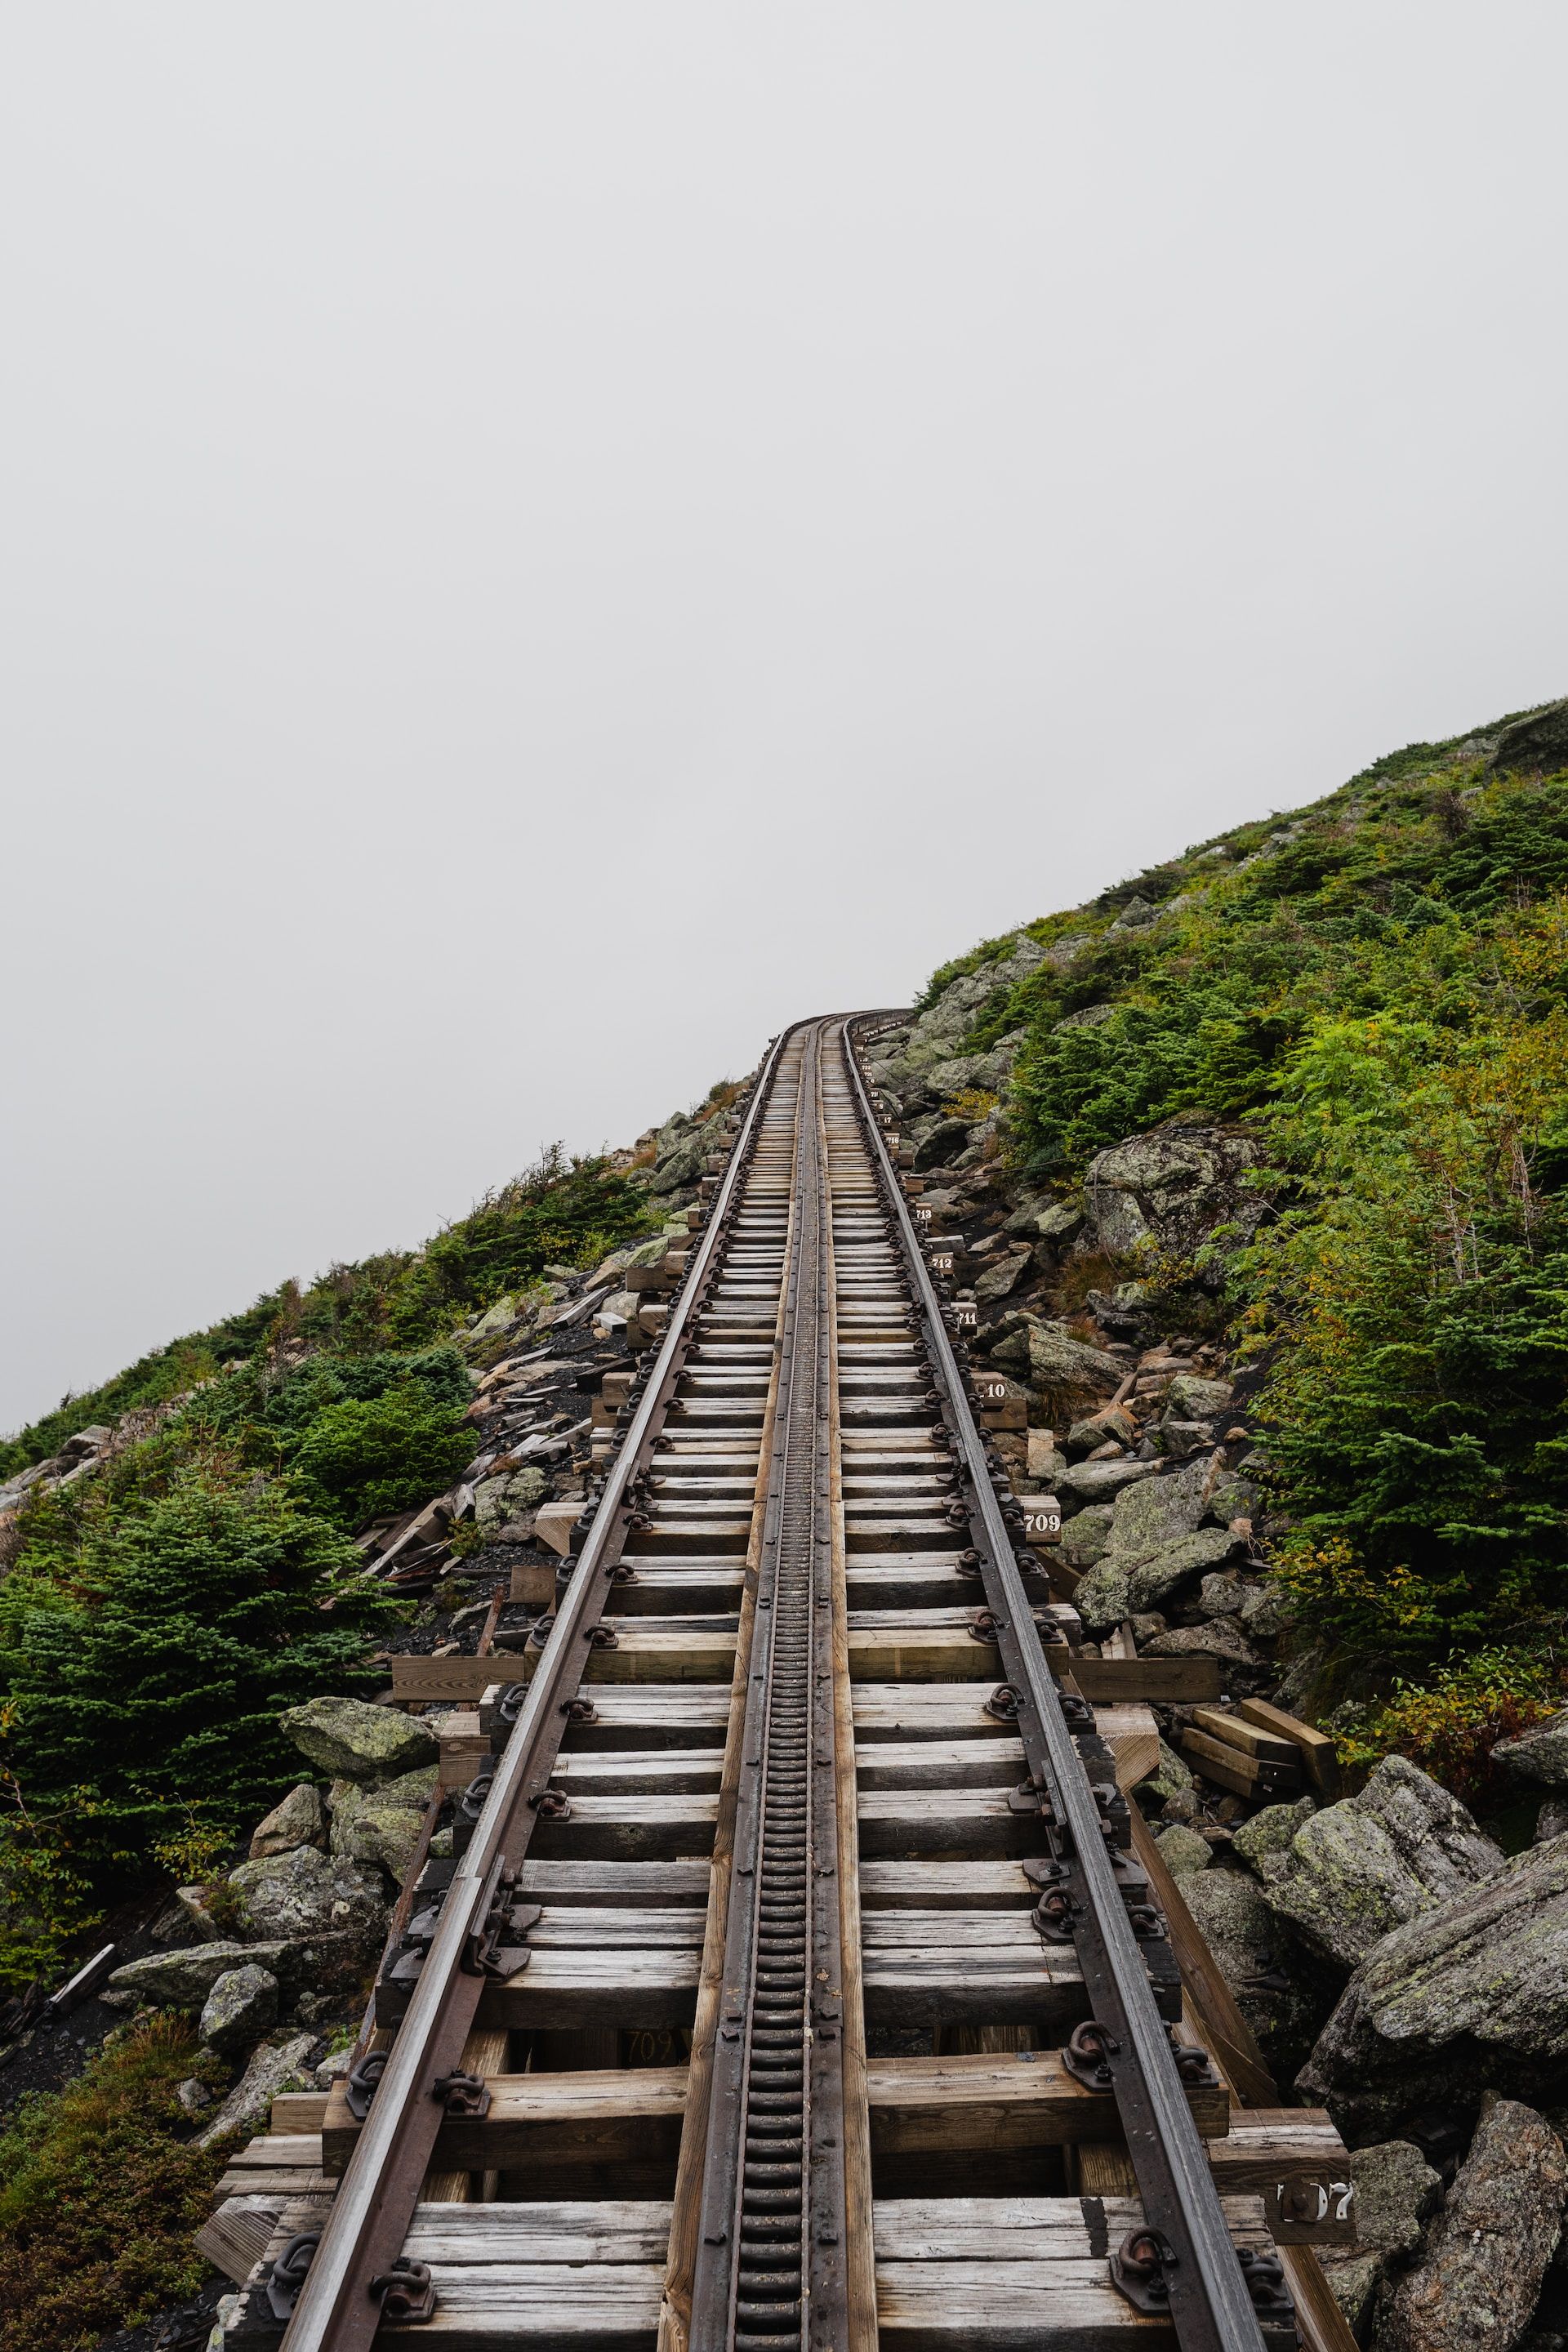 View of tracks on the Mount Washington Cog Railway